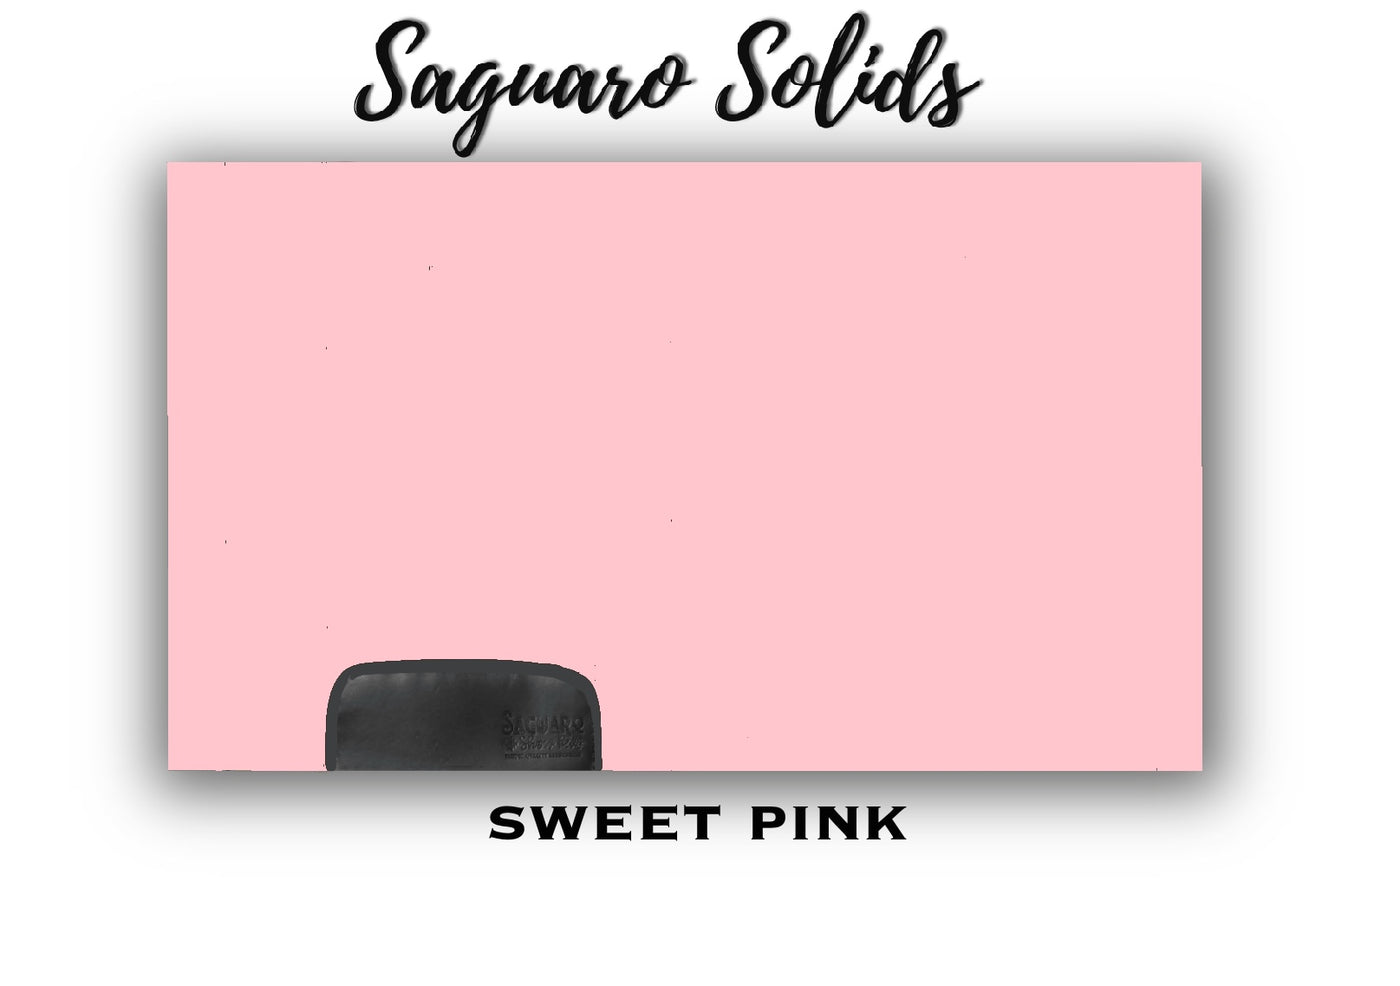 Saguaro Solid "Sweet Pink" Show Pad (SEMI-CUSTOM)